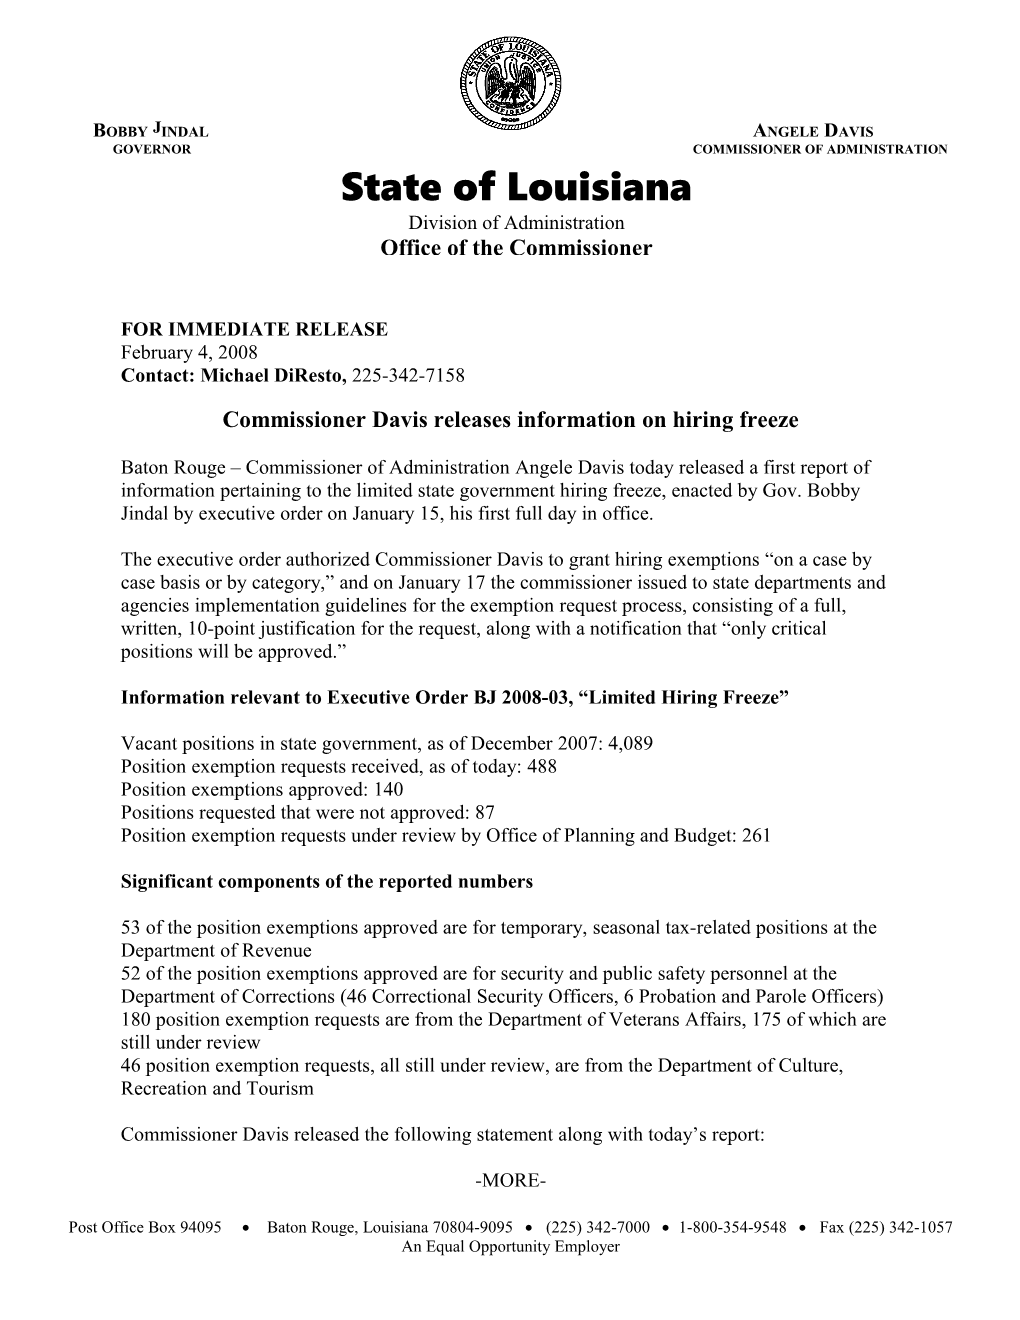 Commissioner Davis Releases Information on Hiring Freeze